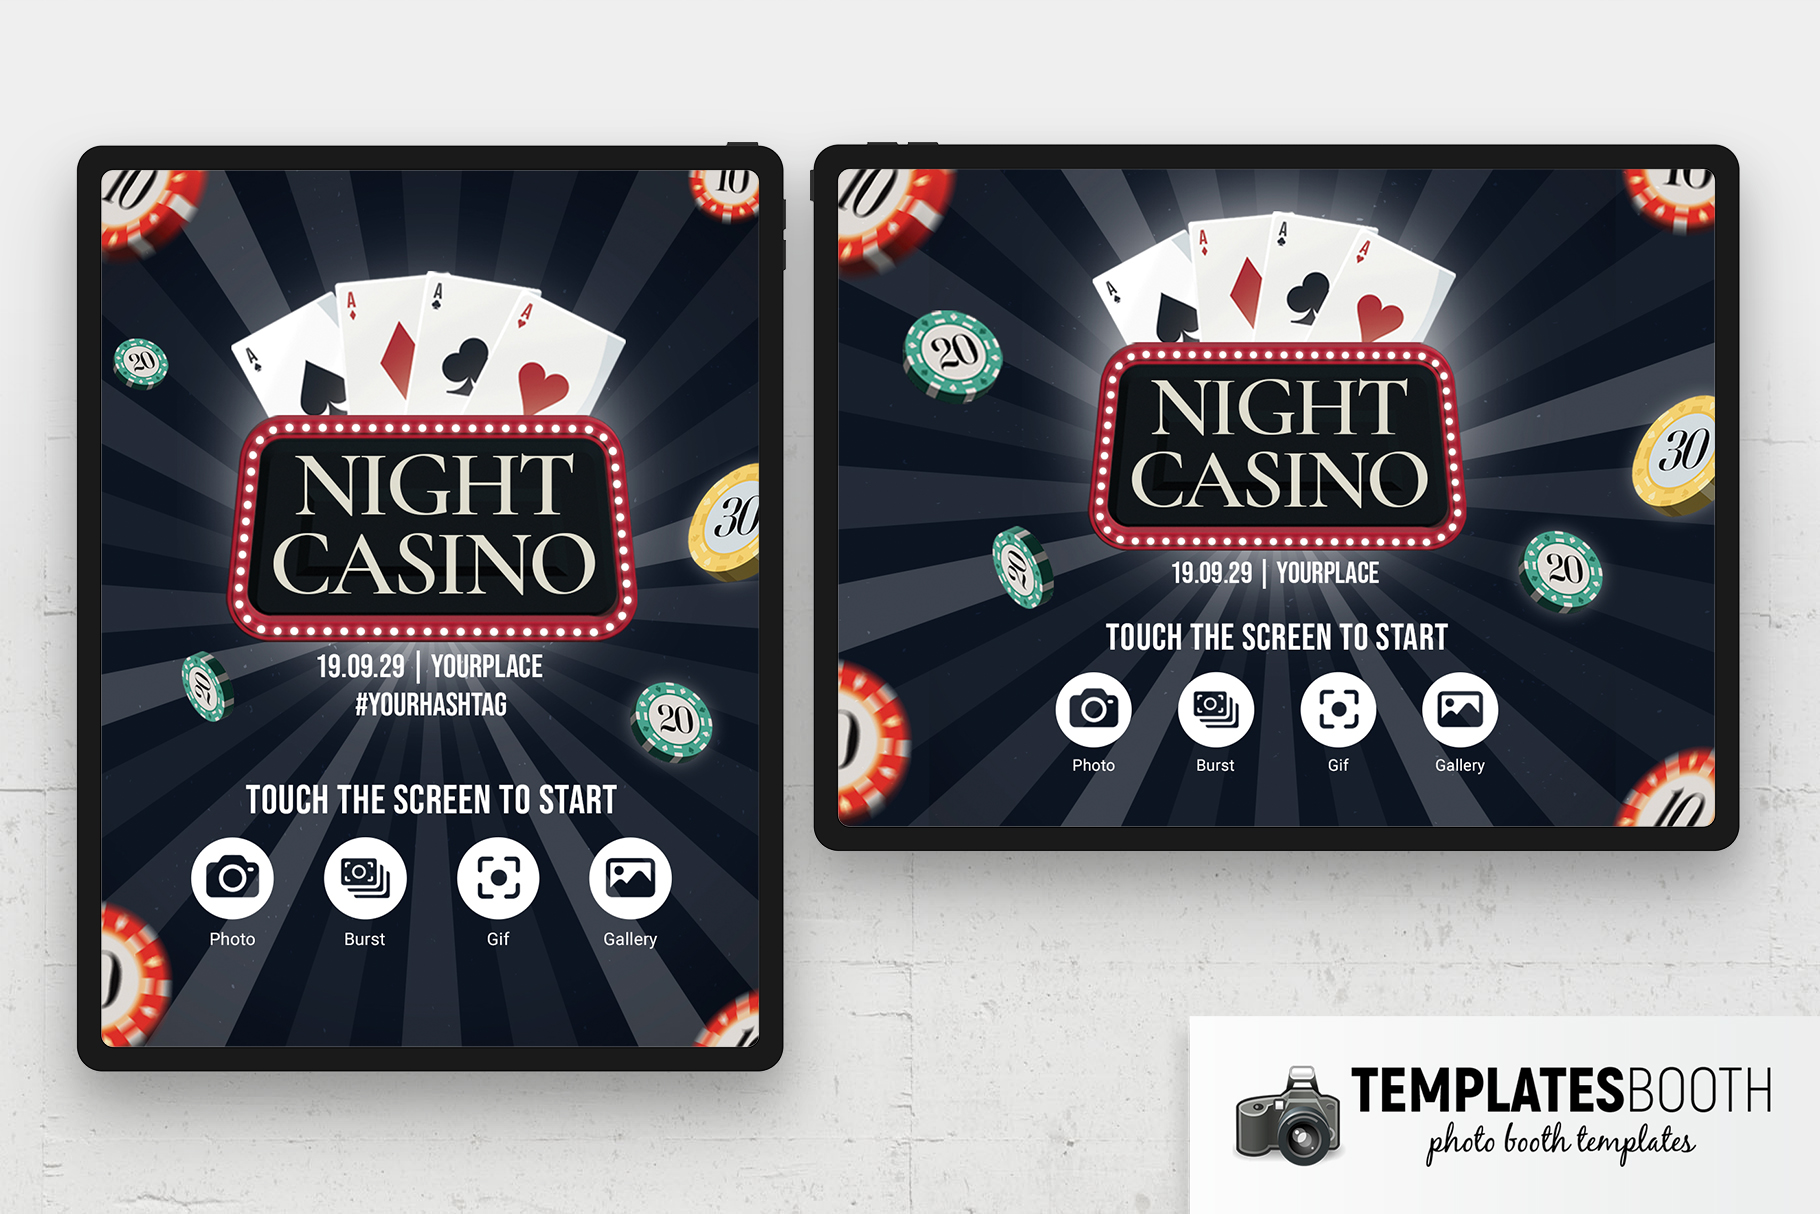 Casino Night Photo Booth Welcome Screen